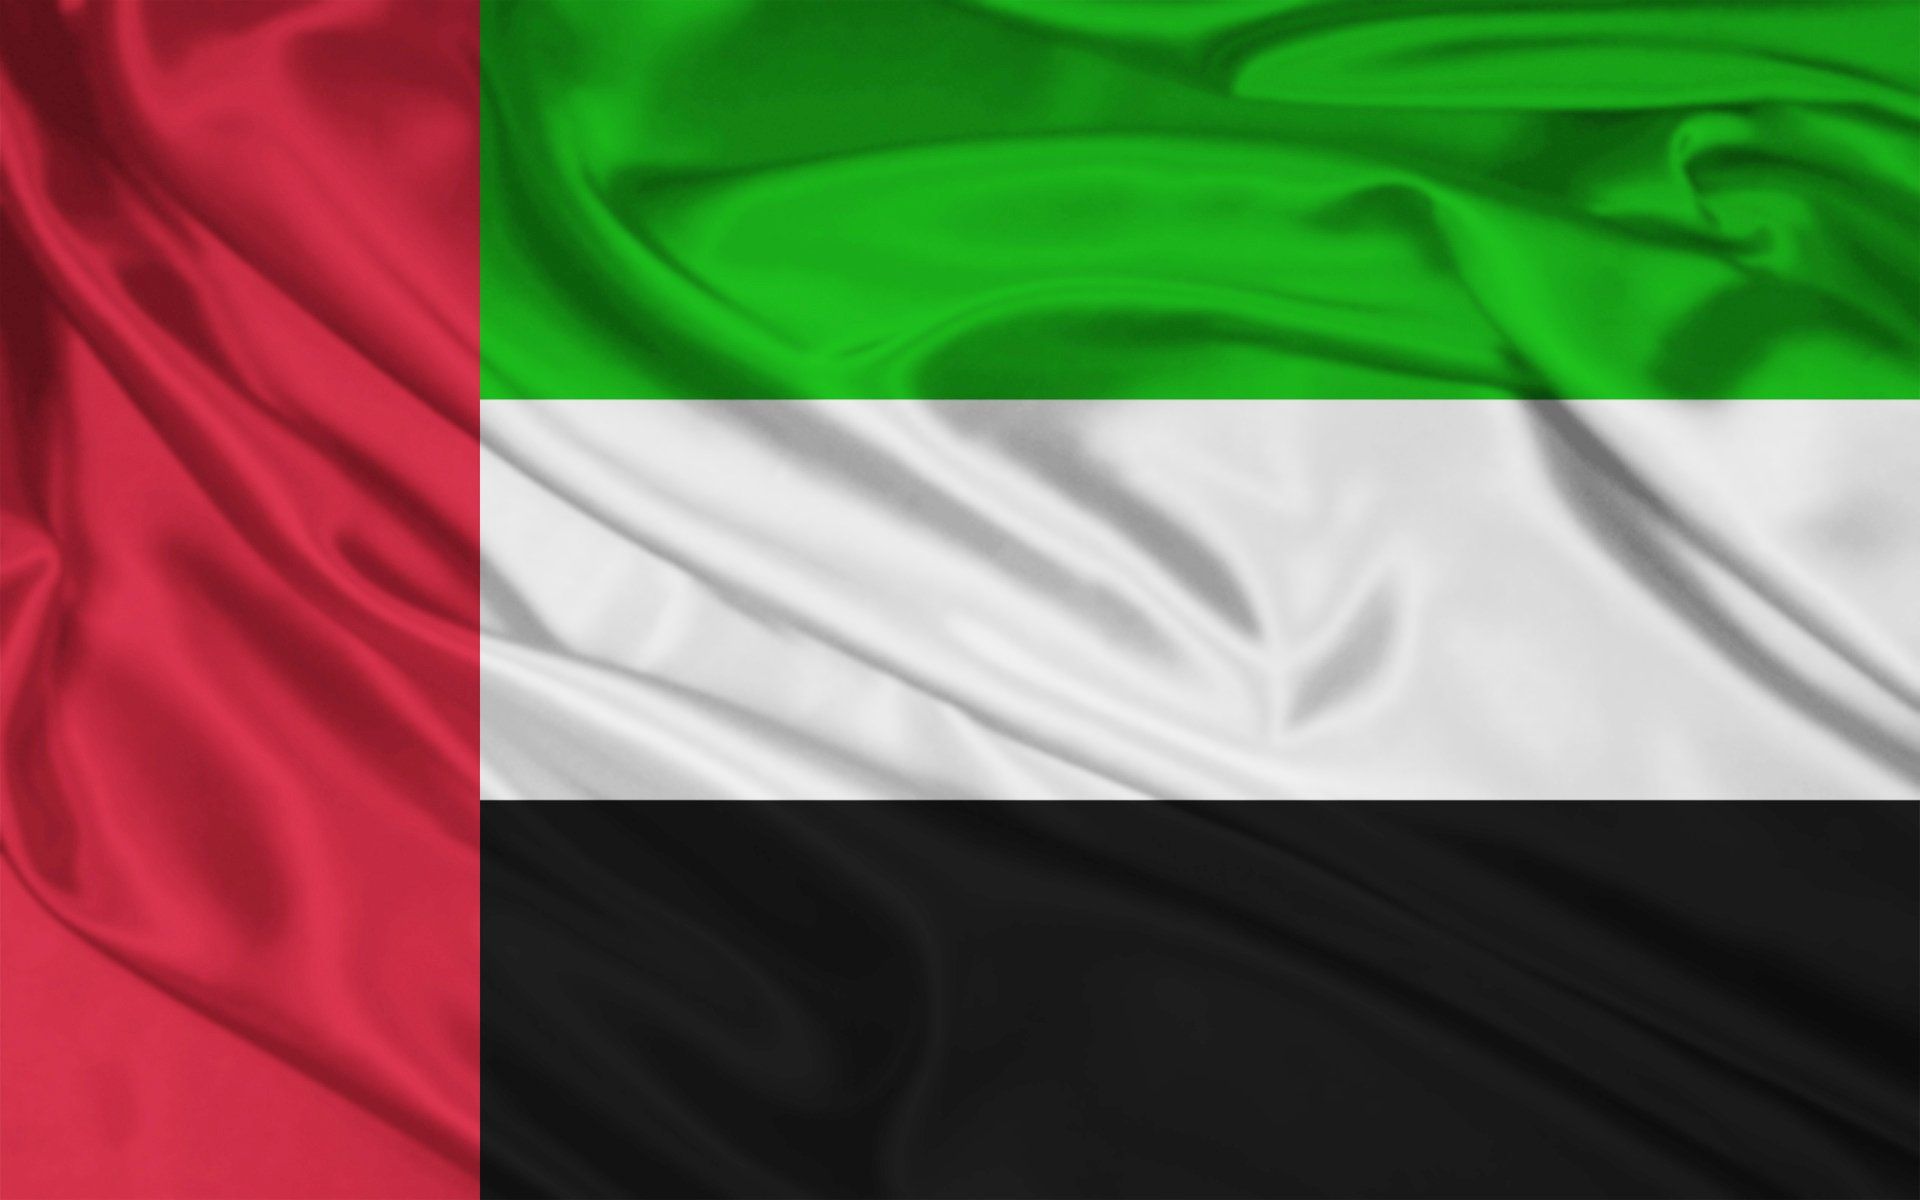 United Arab Emirates Flag Wallpaper